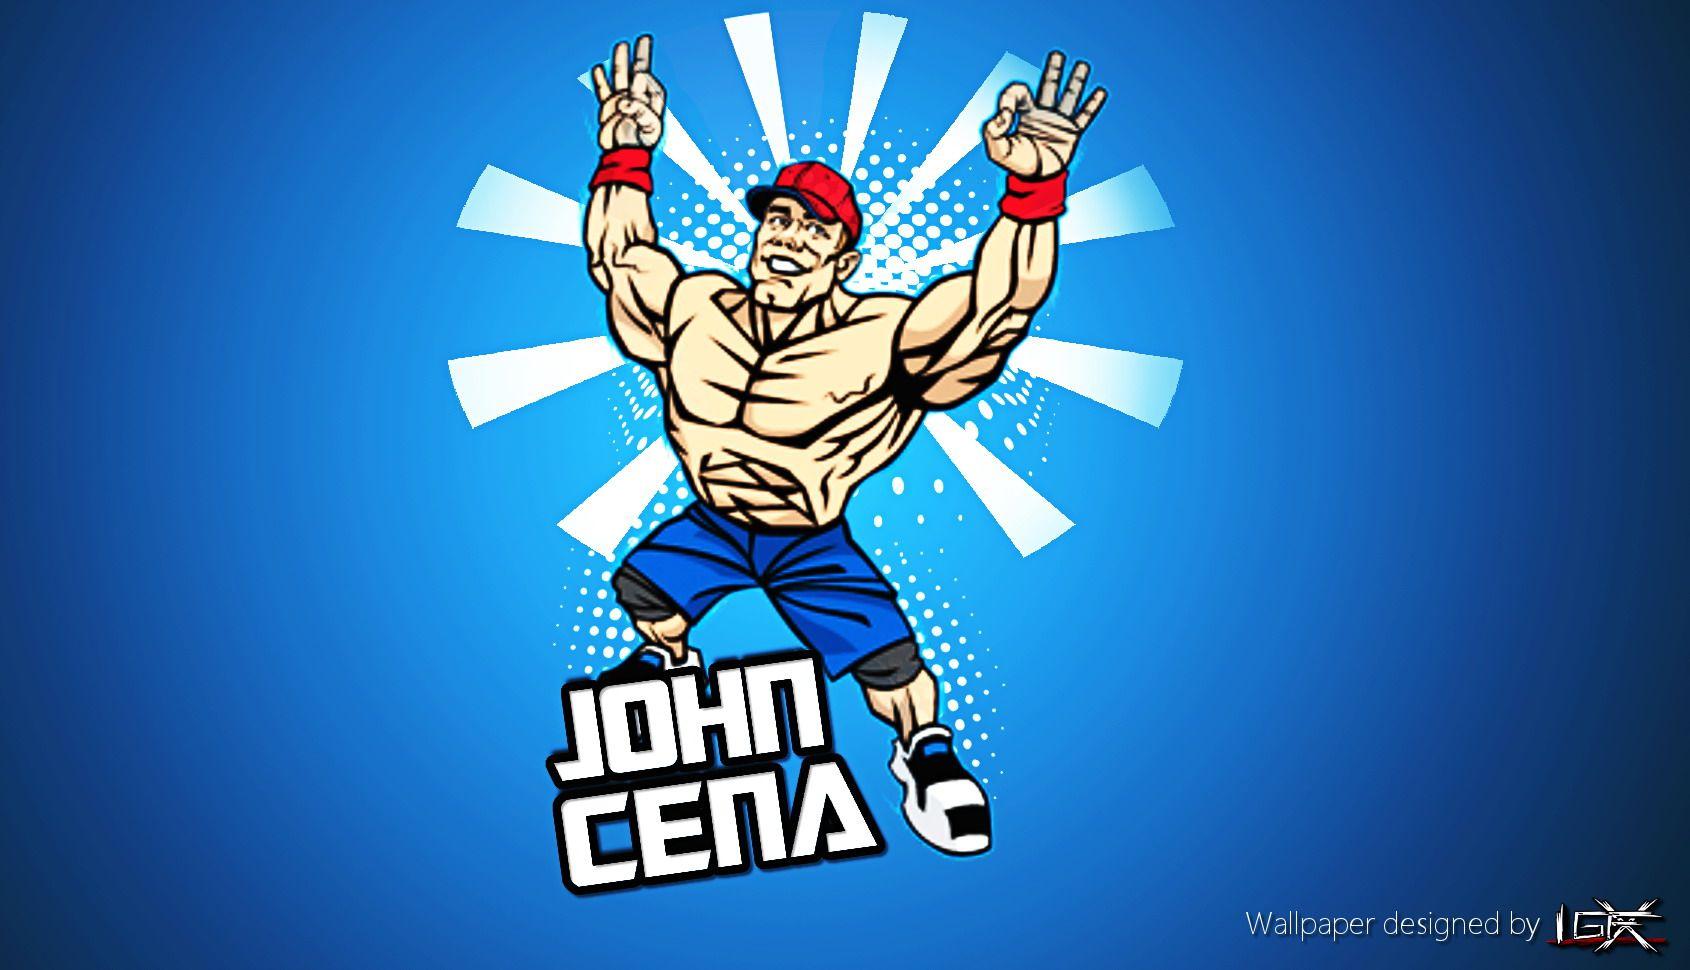 Download John Cena Animated Wallpaper Gallery